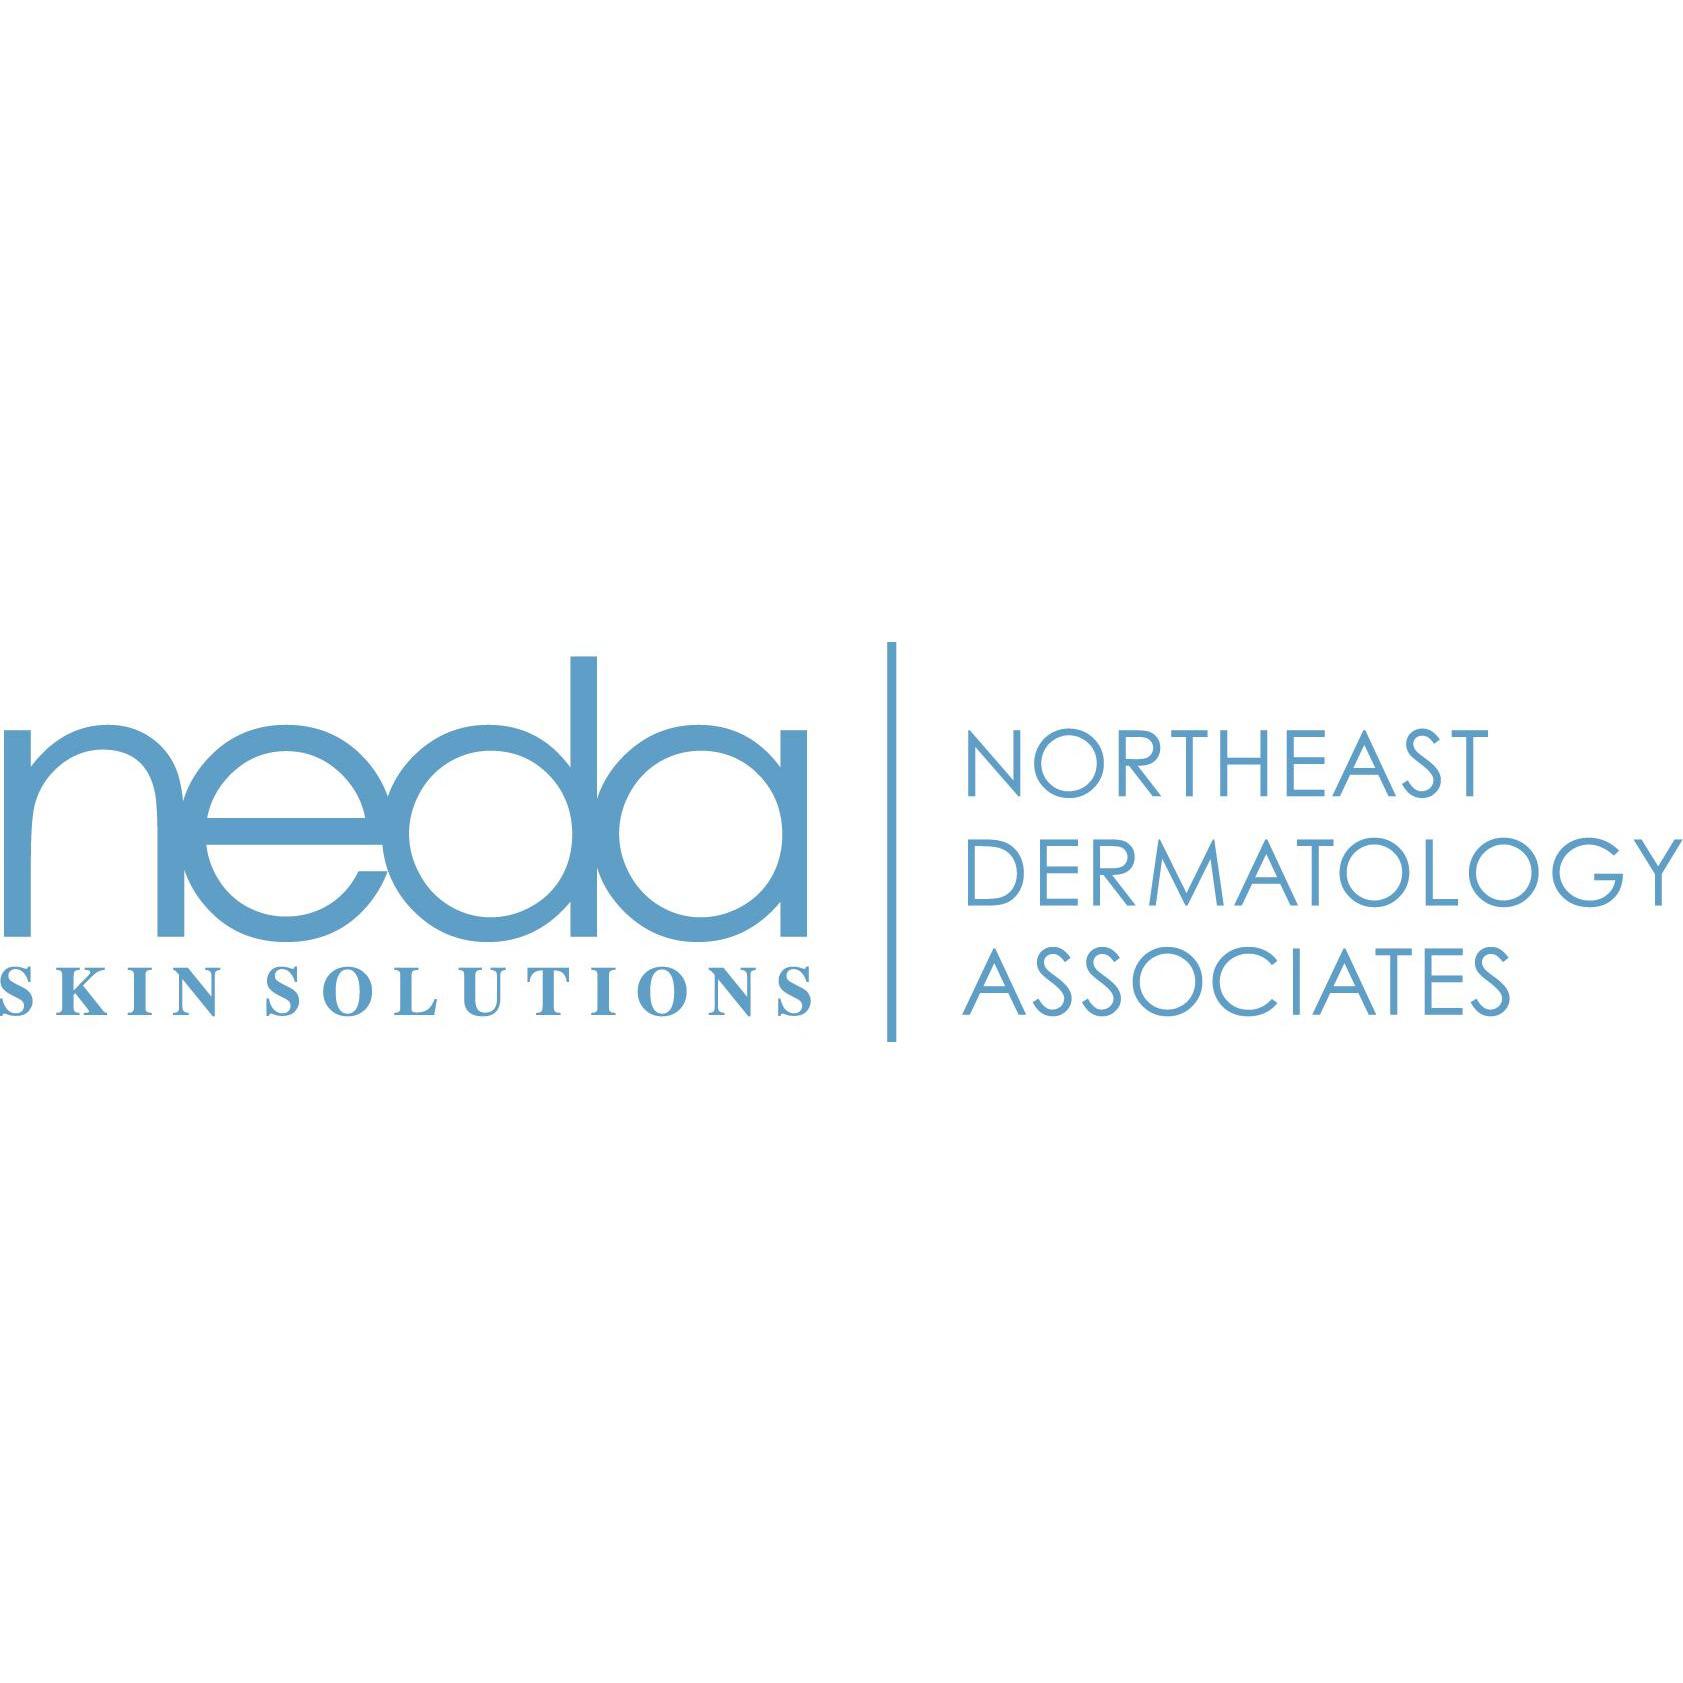 Northeast Dermatology Associates